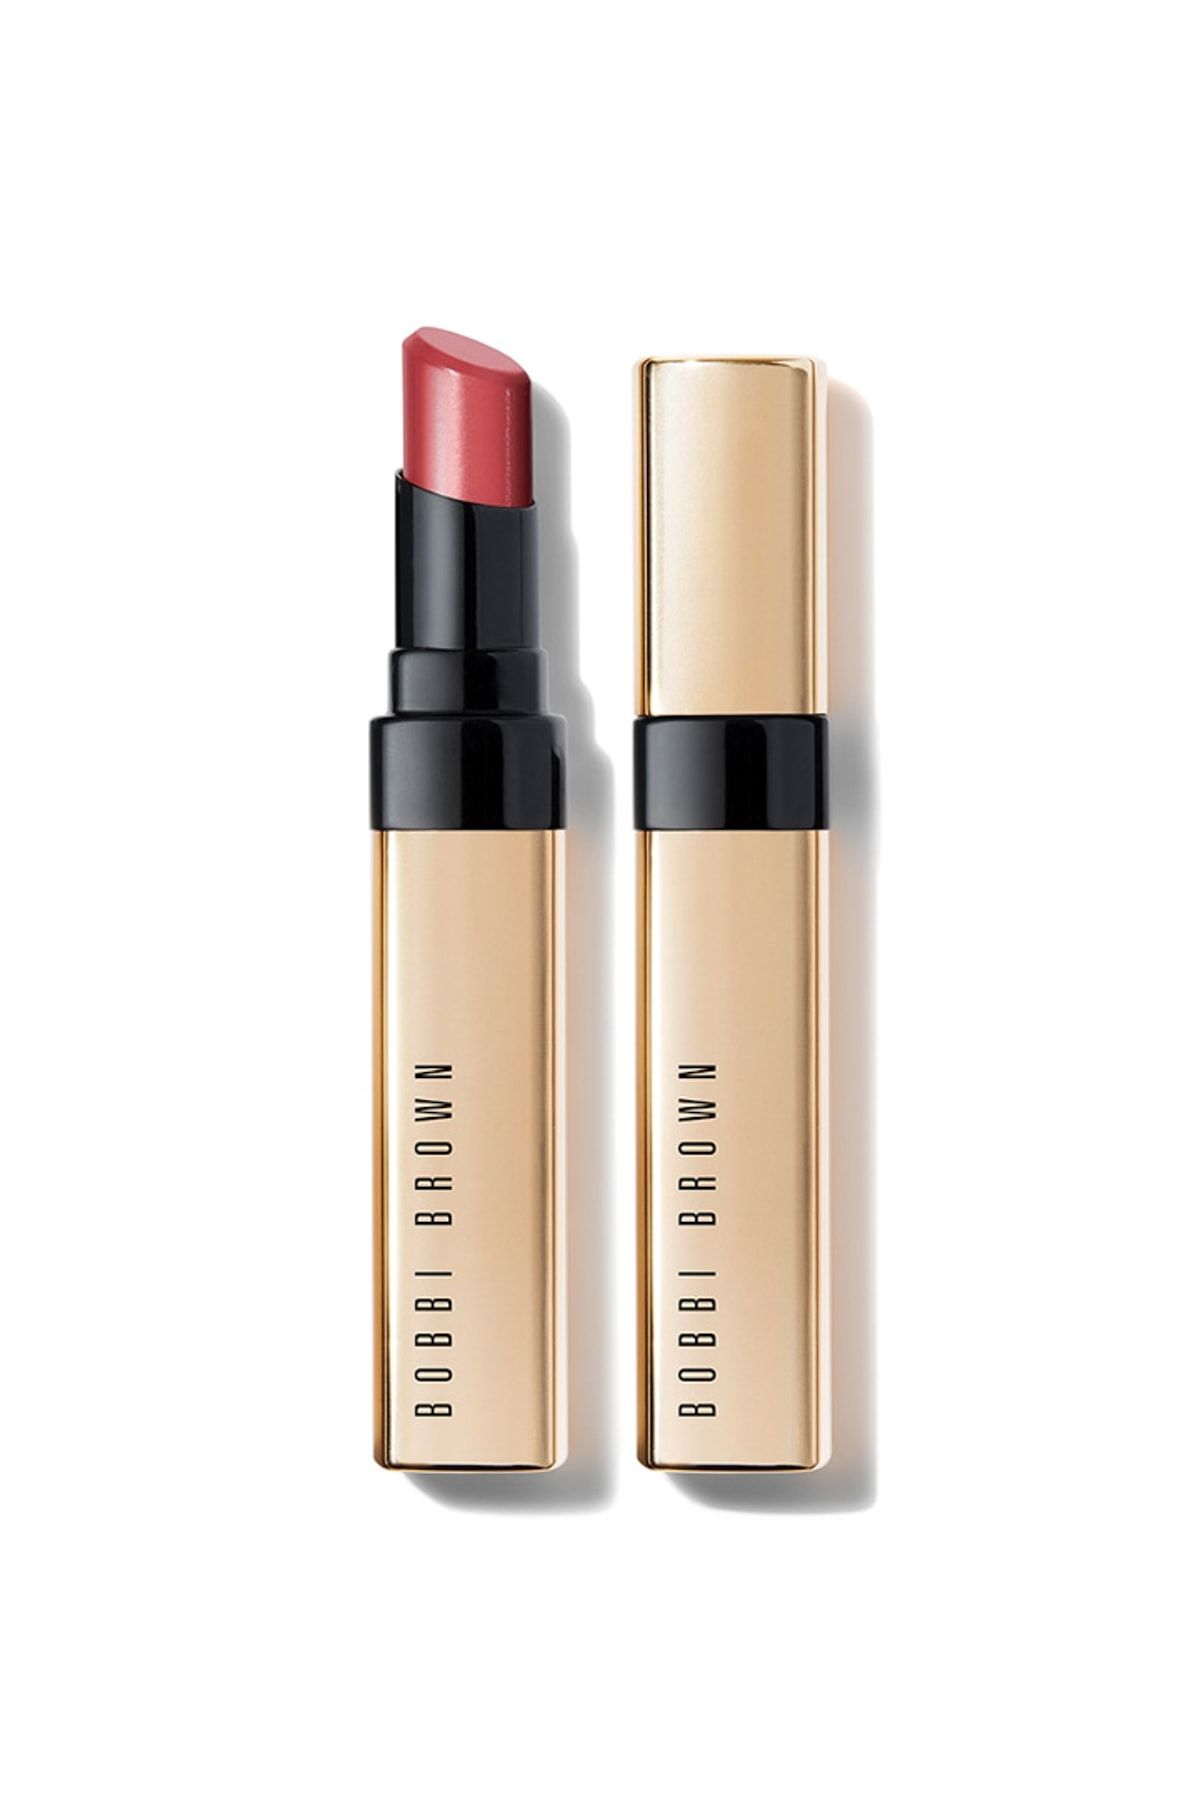 Bobbi Brown Ruj - Luxe Shine Intense Lipstick Trailblazer 716170225487